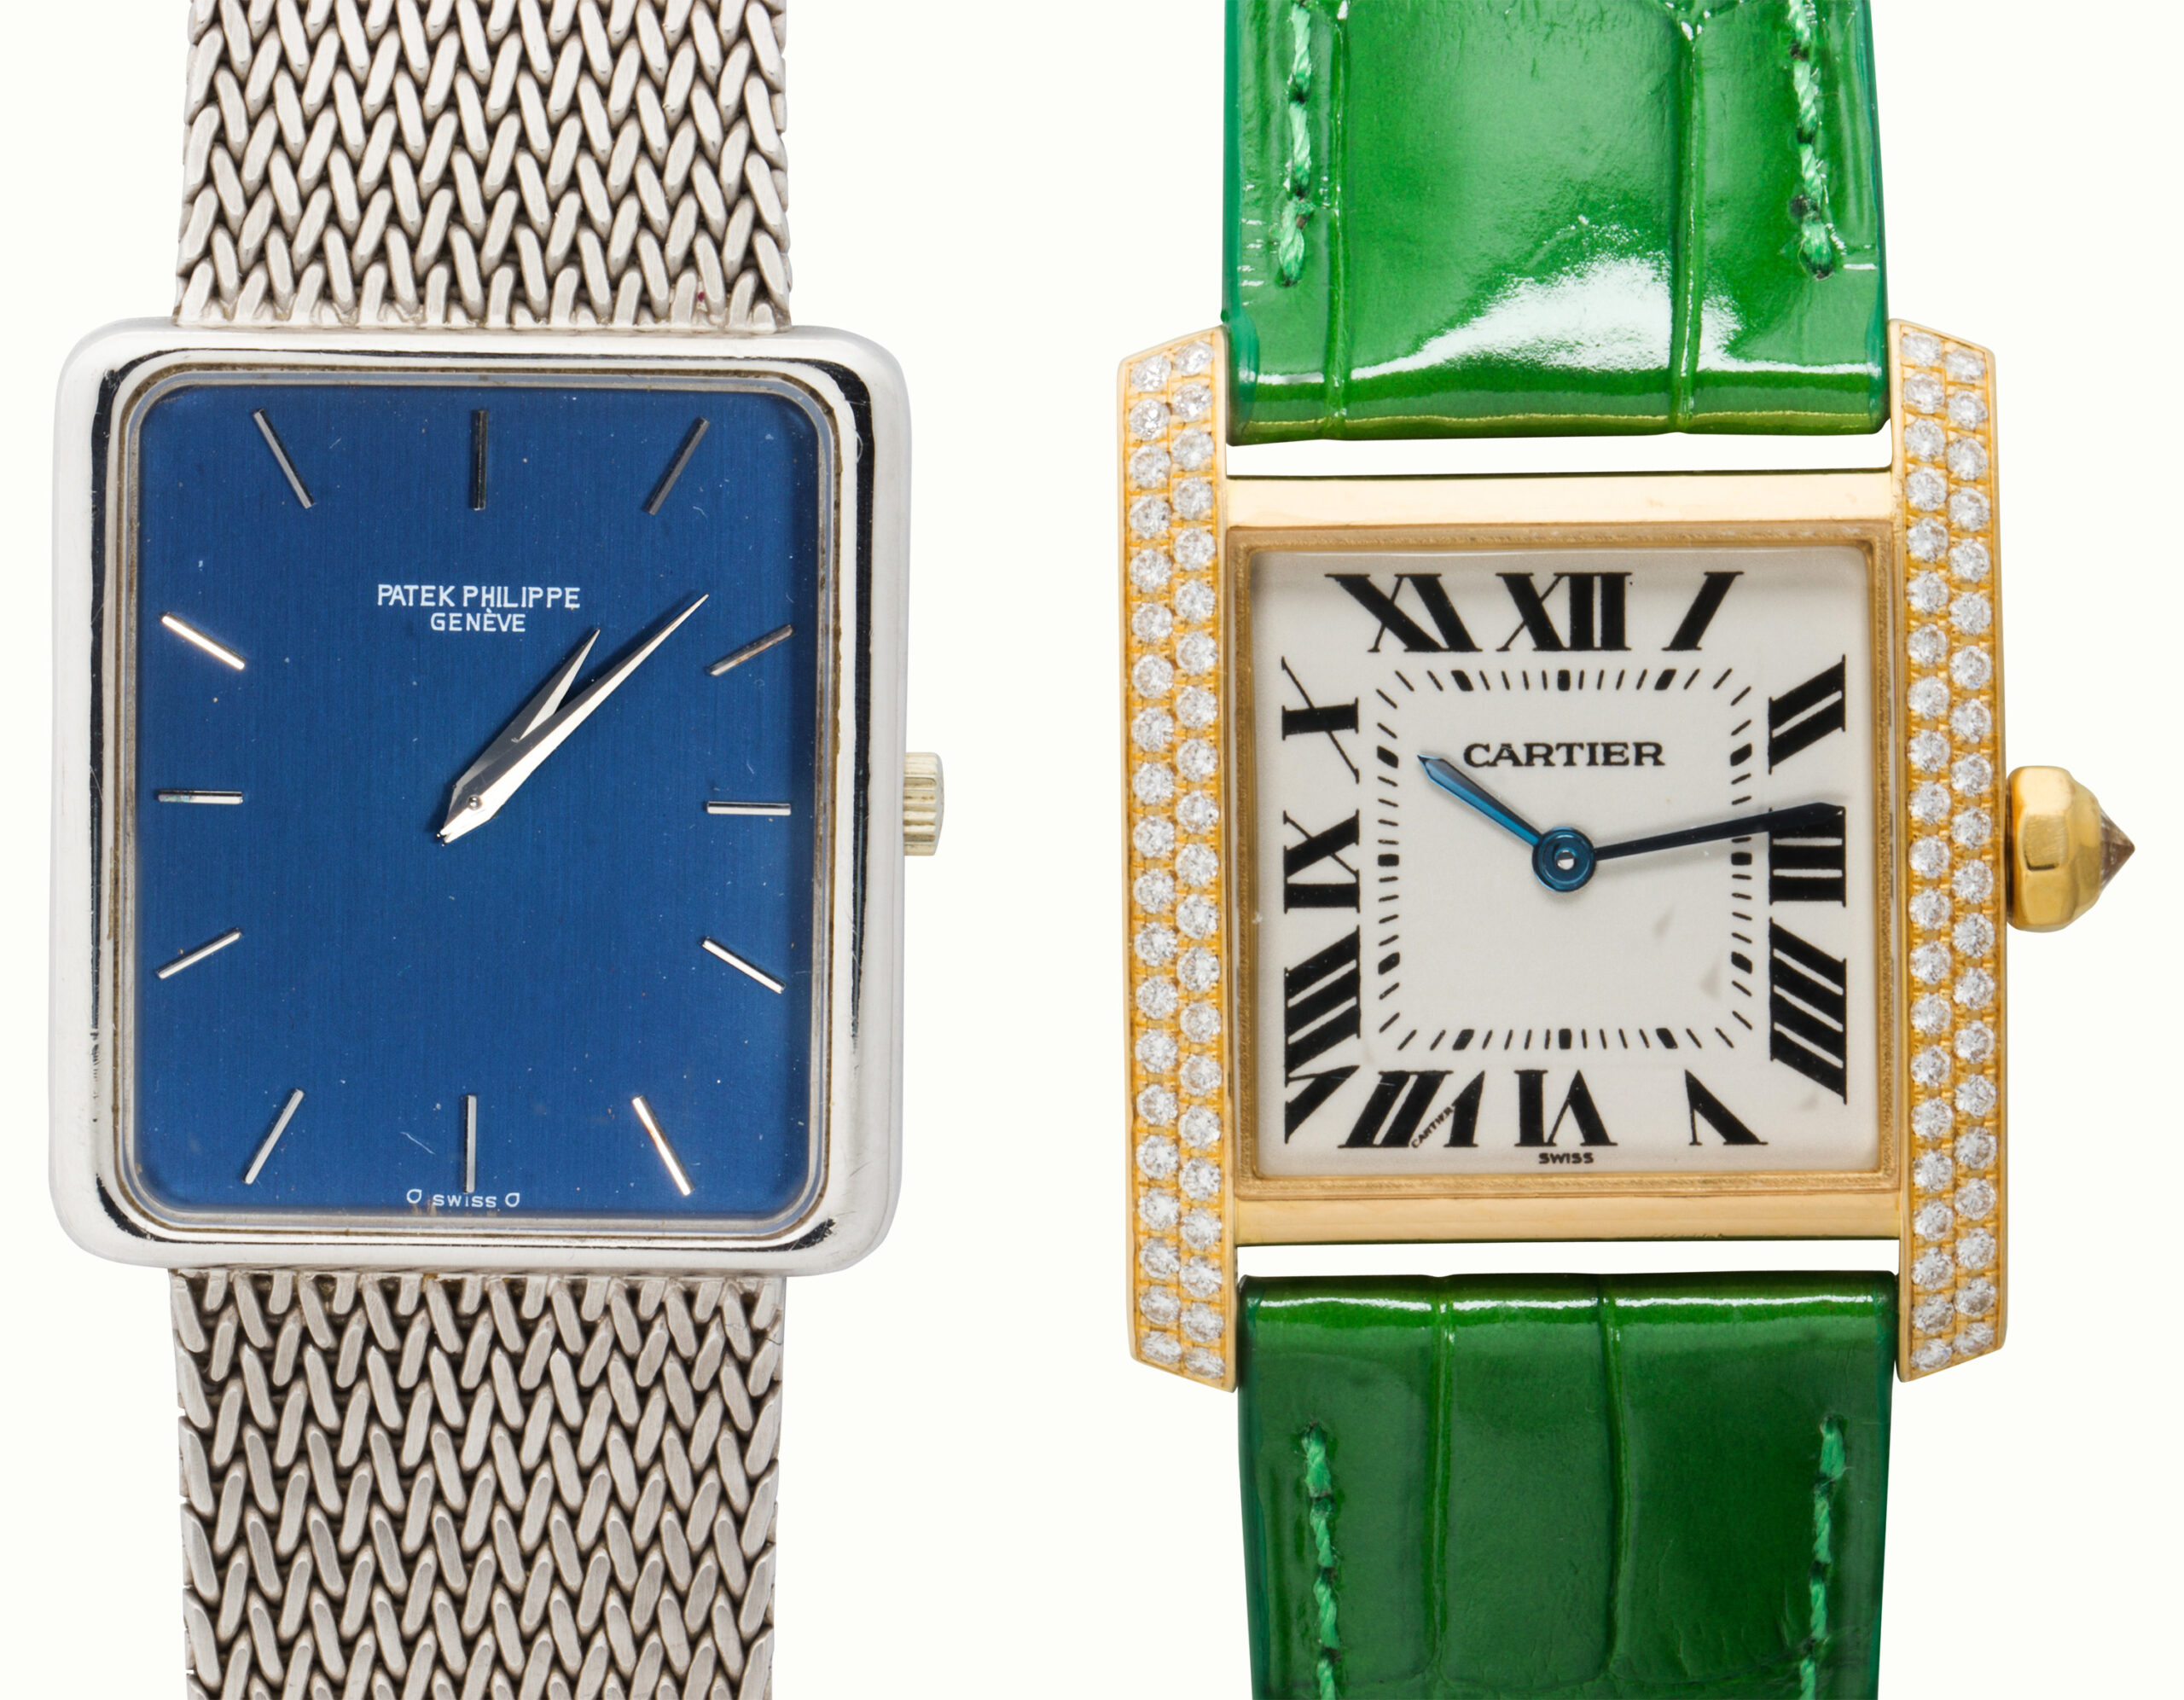 Patek Phillipe wristwatch and Cartier wristwatch.